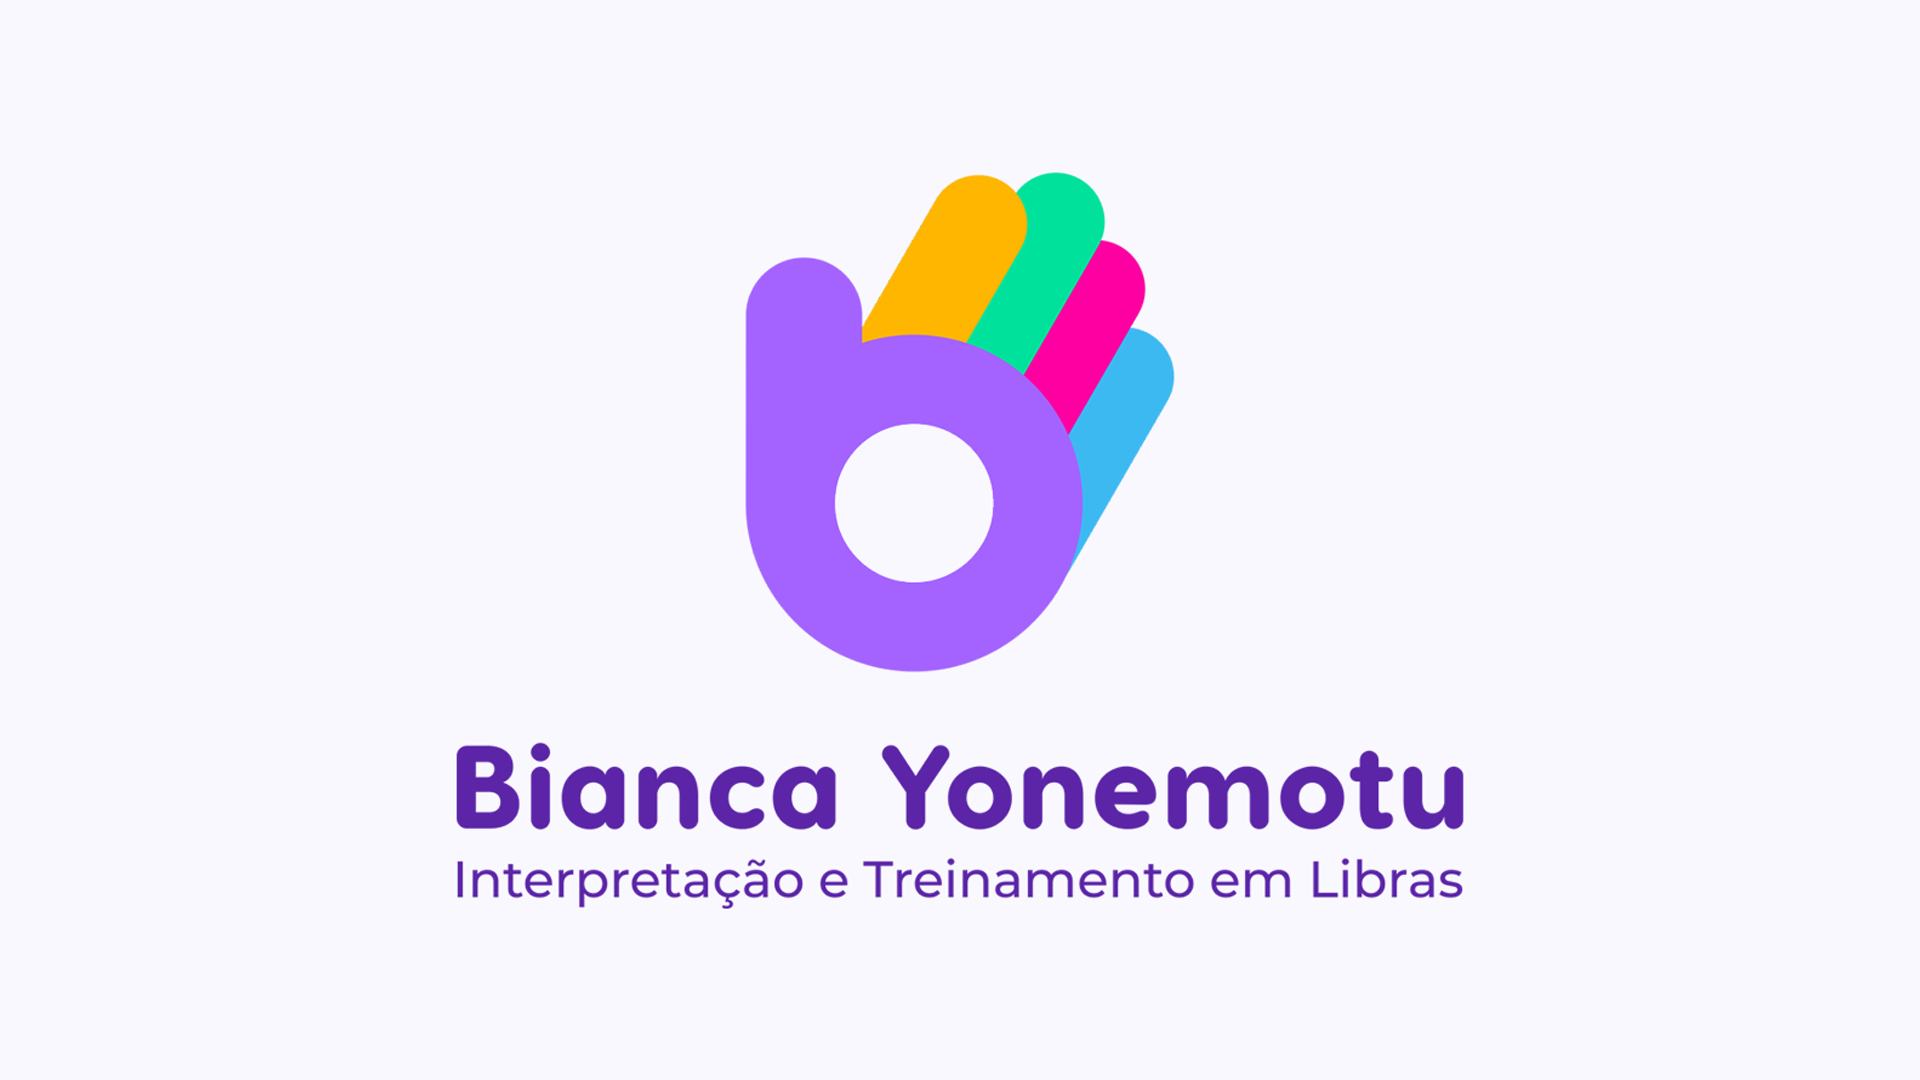 Bianca Yonemotu